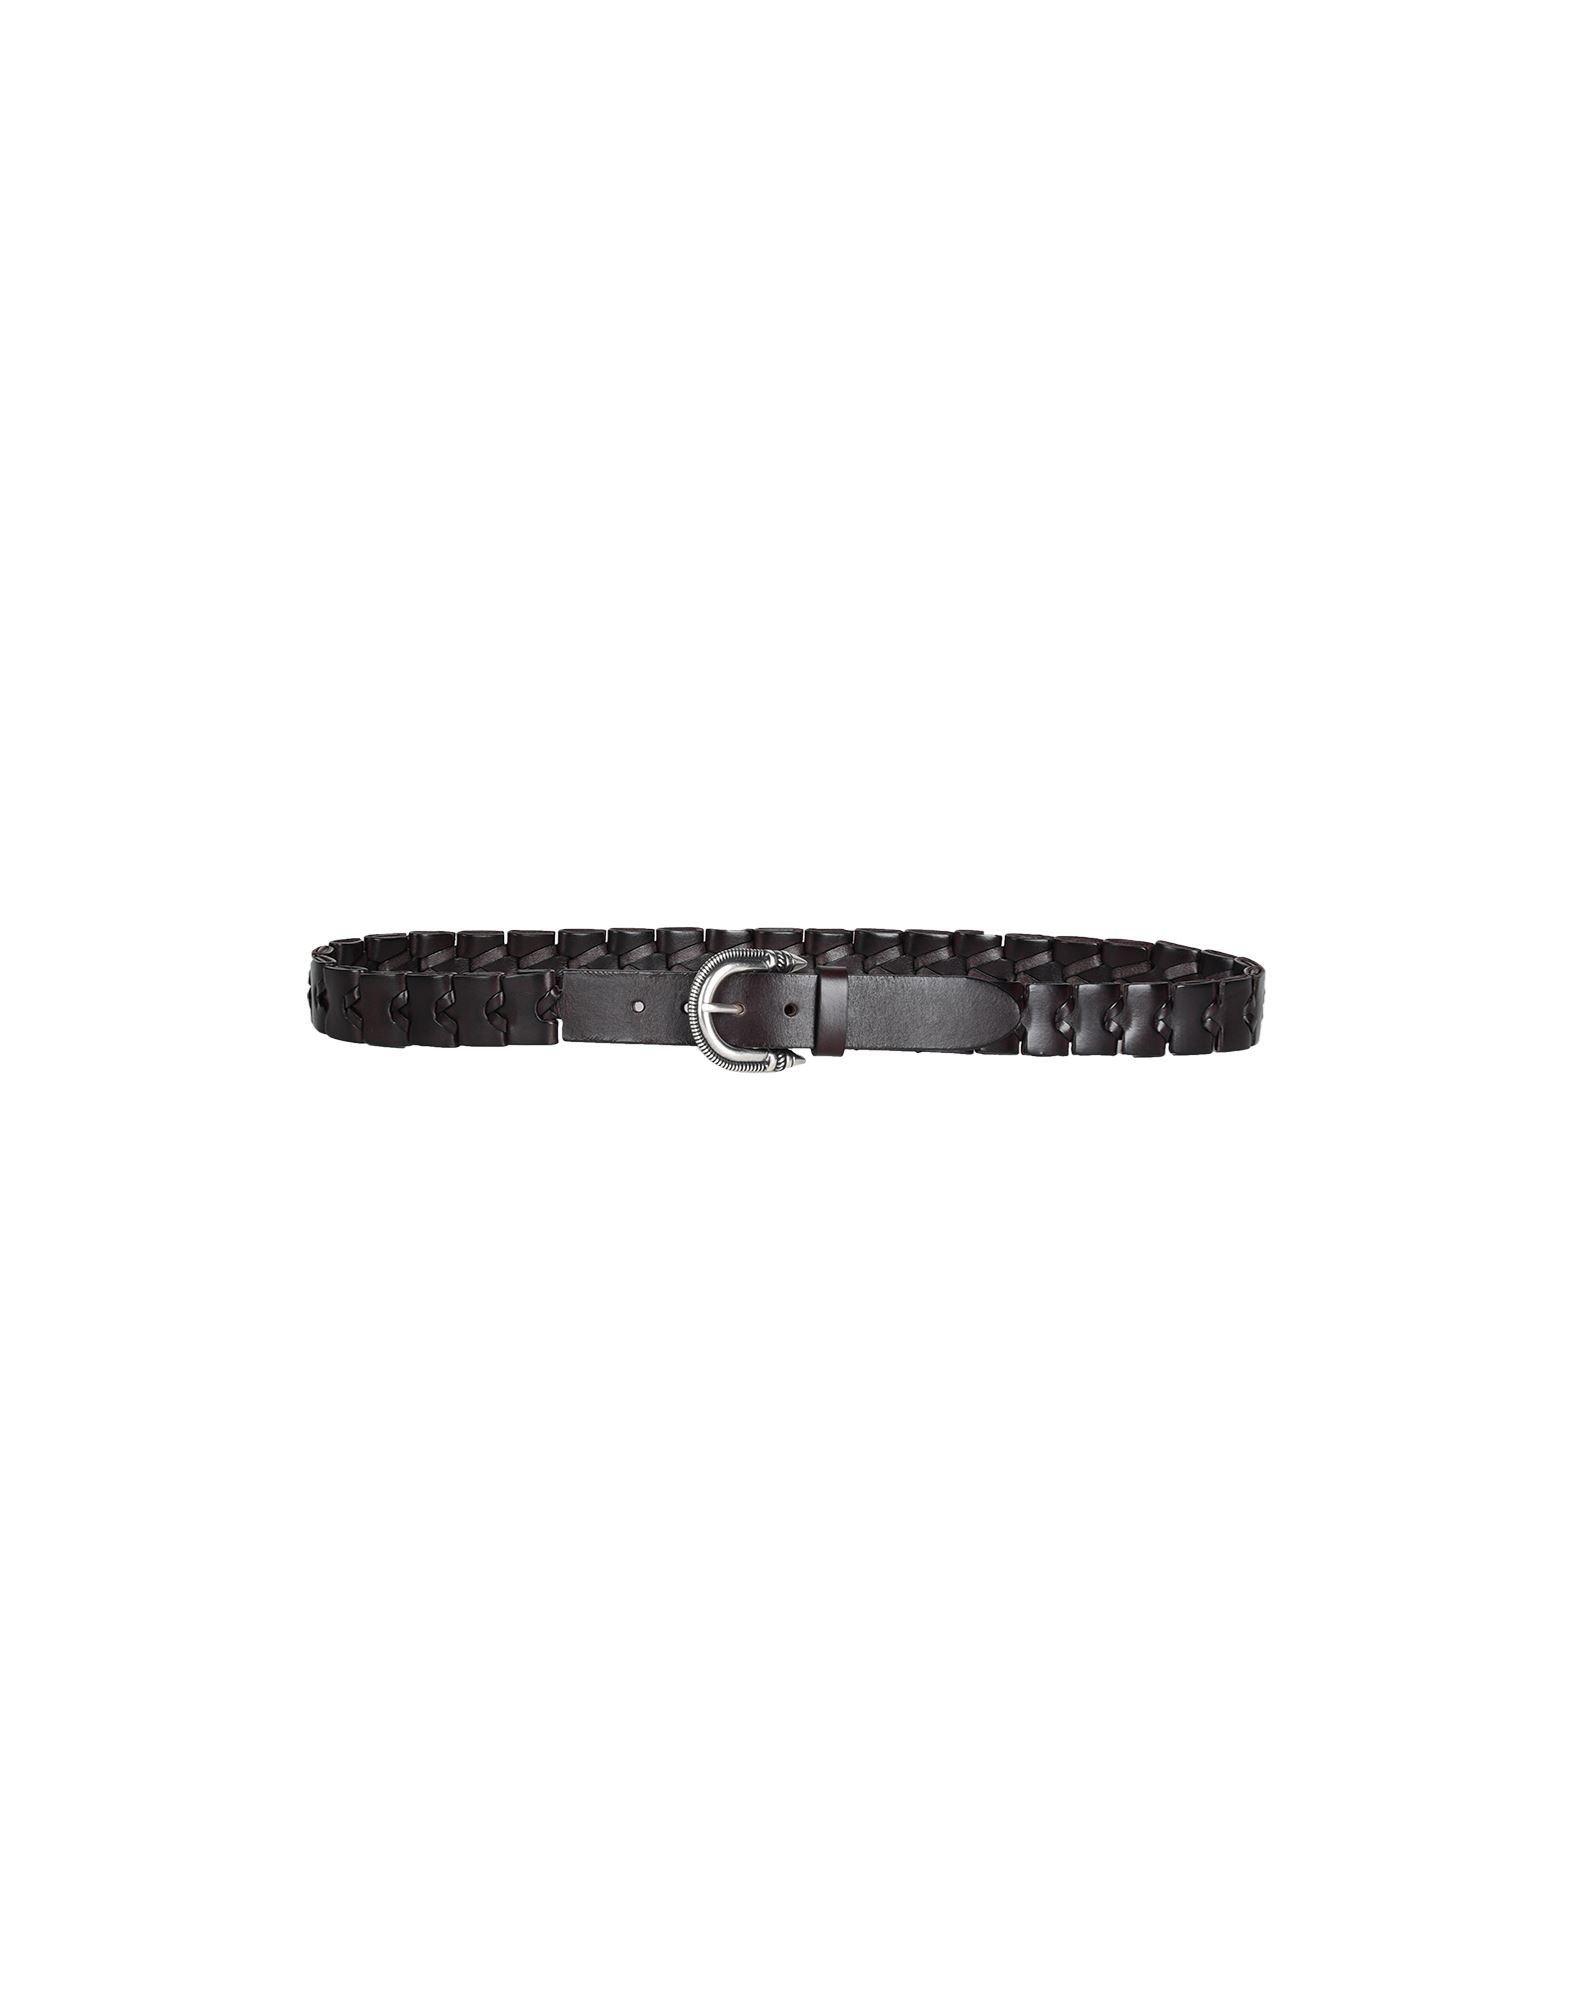 Braided leather belt in black - Etro